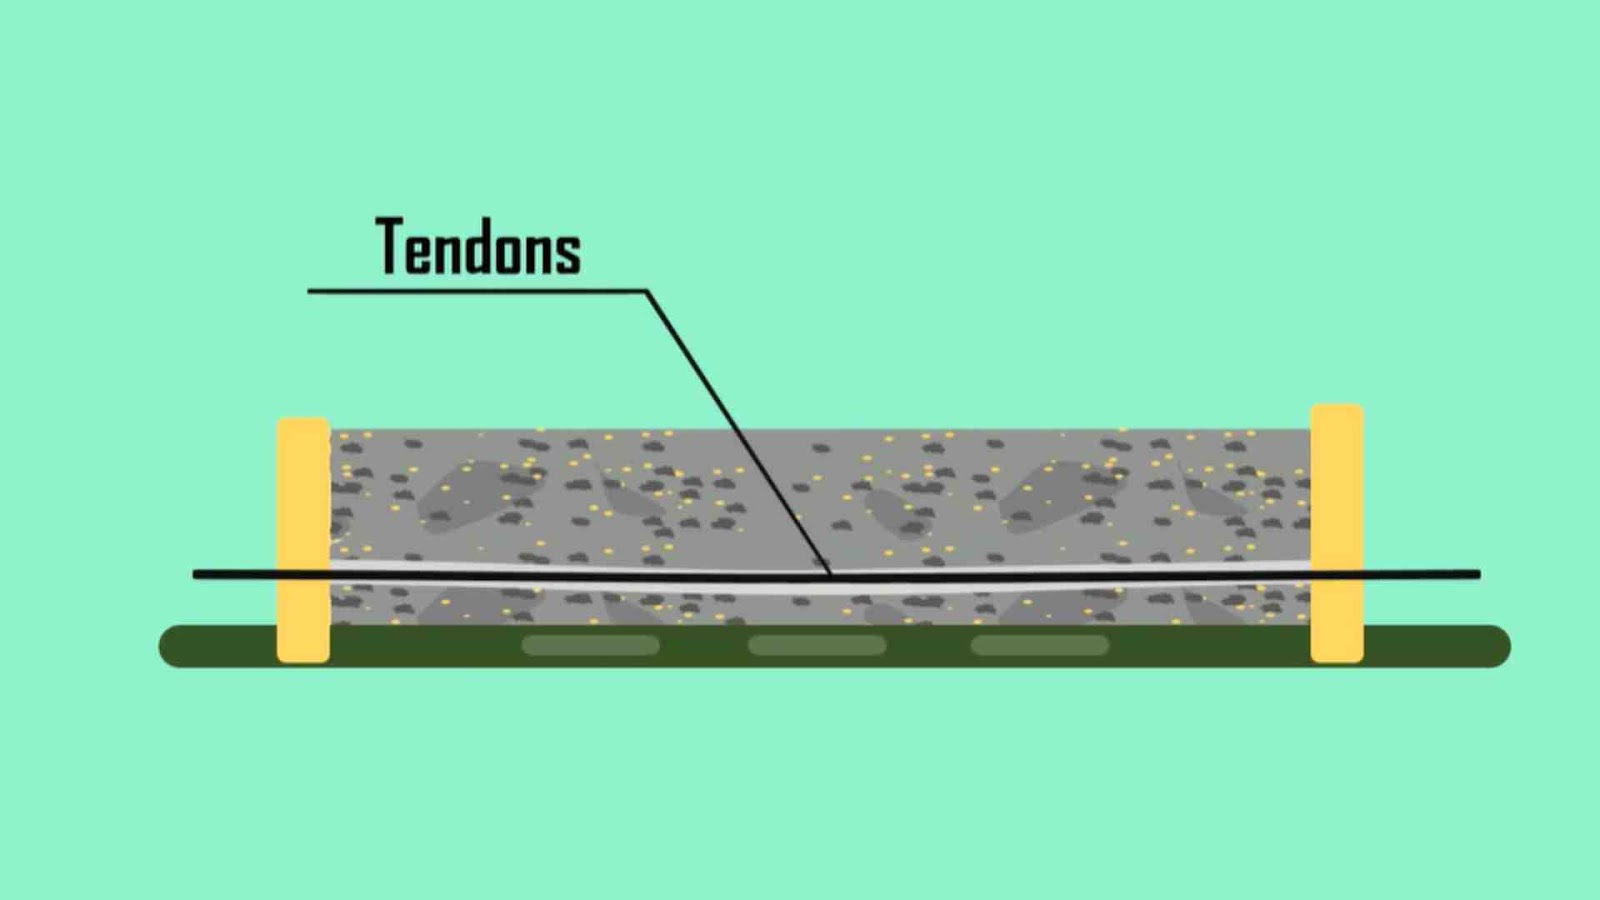 Place tendons